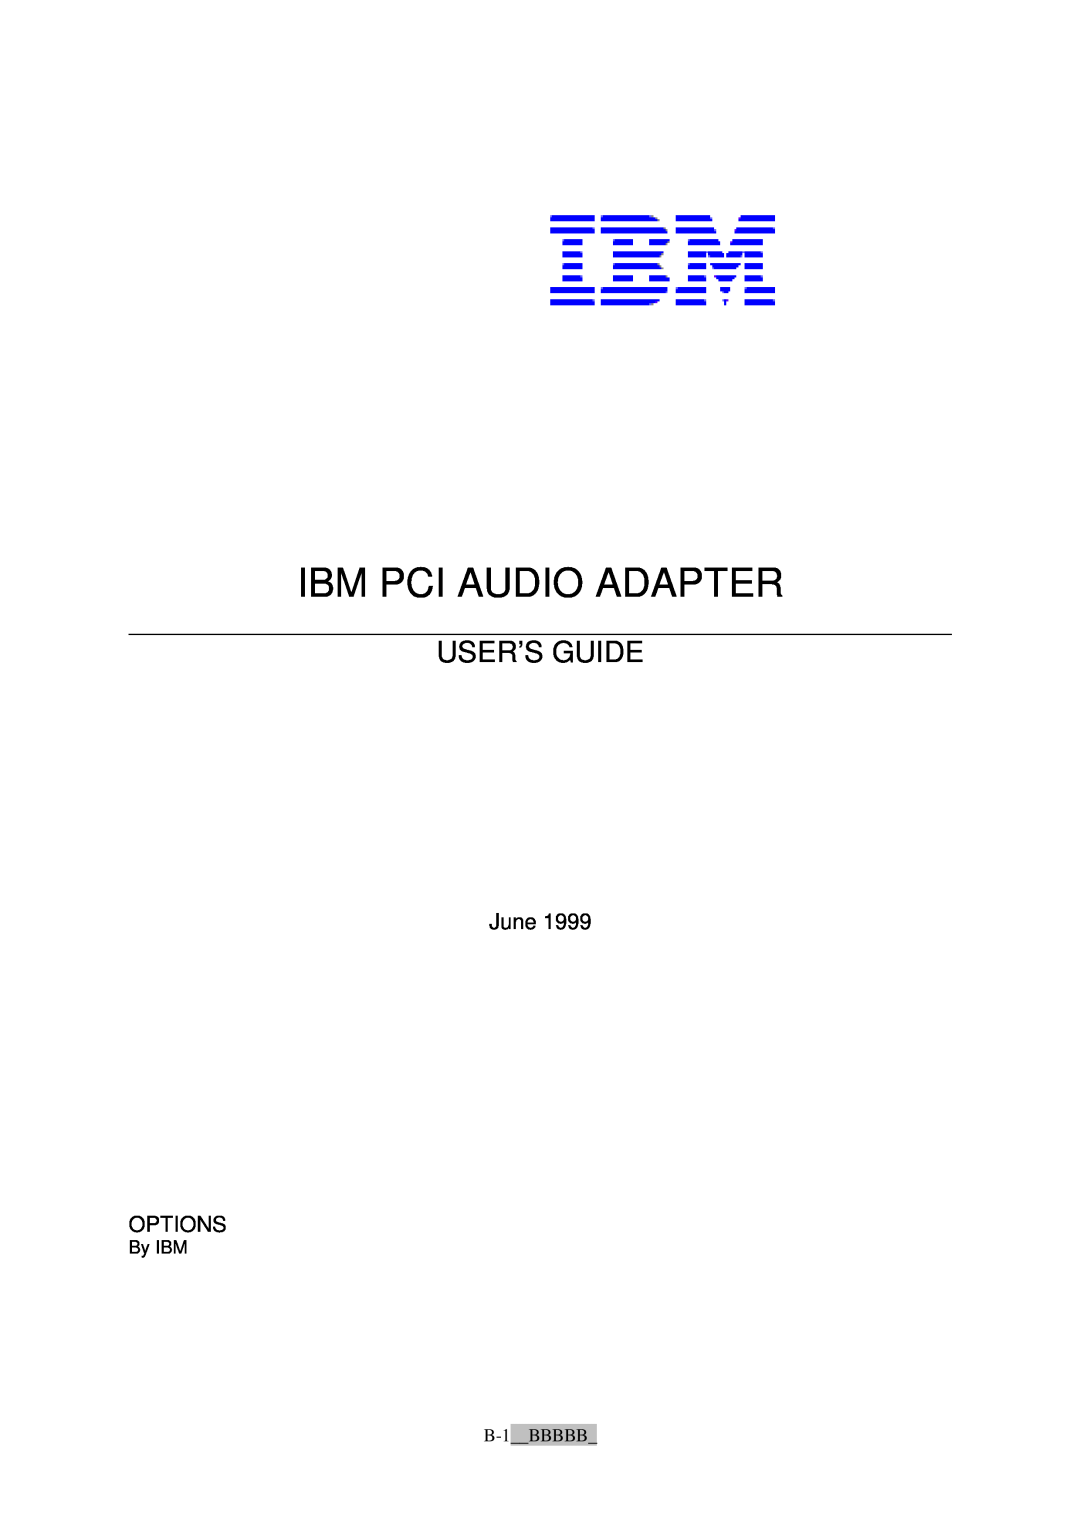 IBM L70 manual June OPTIONS, Ibm Pci Audio Adapter, User’S Guide, By IBM 